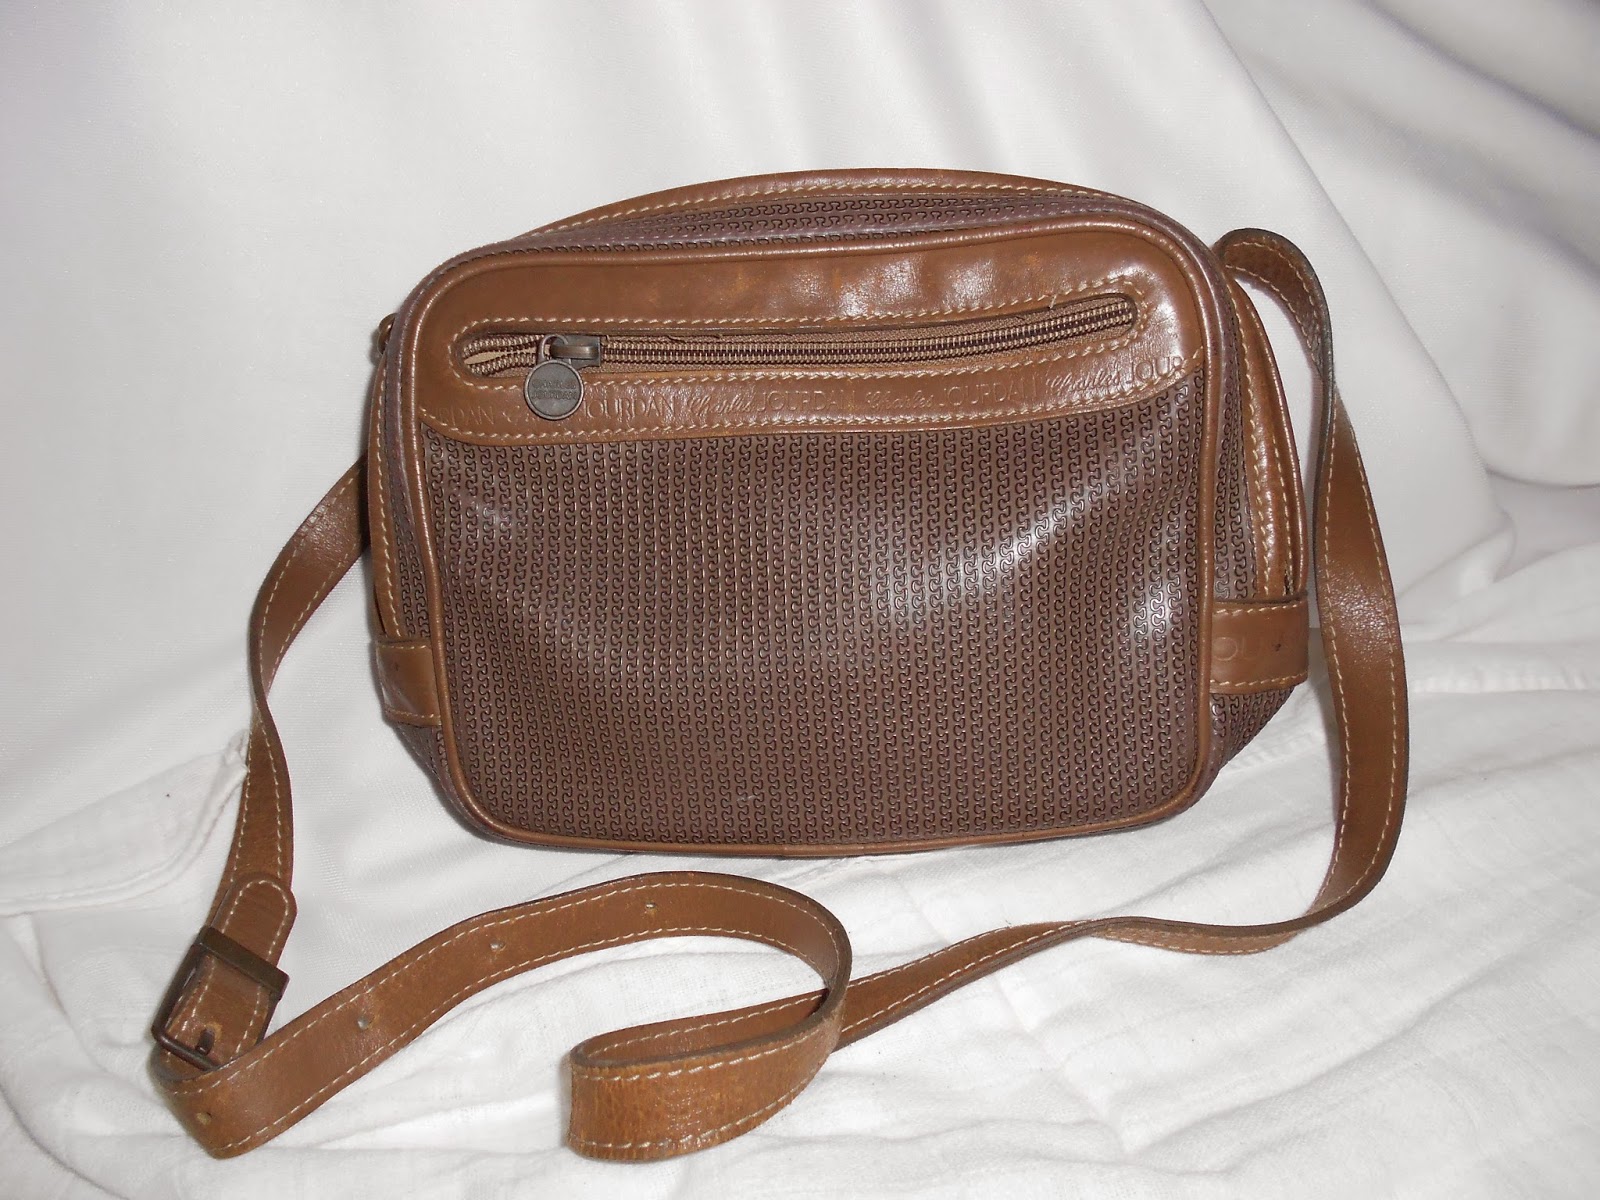 Branded Closet Bundle: Authentic CHARLES JOURDAN leather mini sling bag